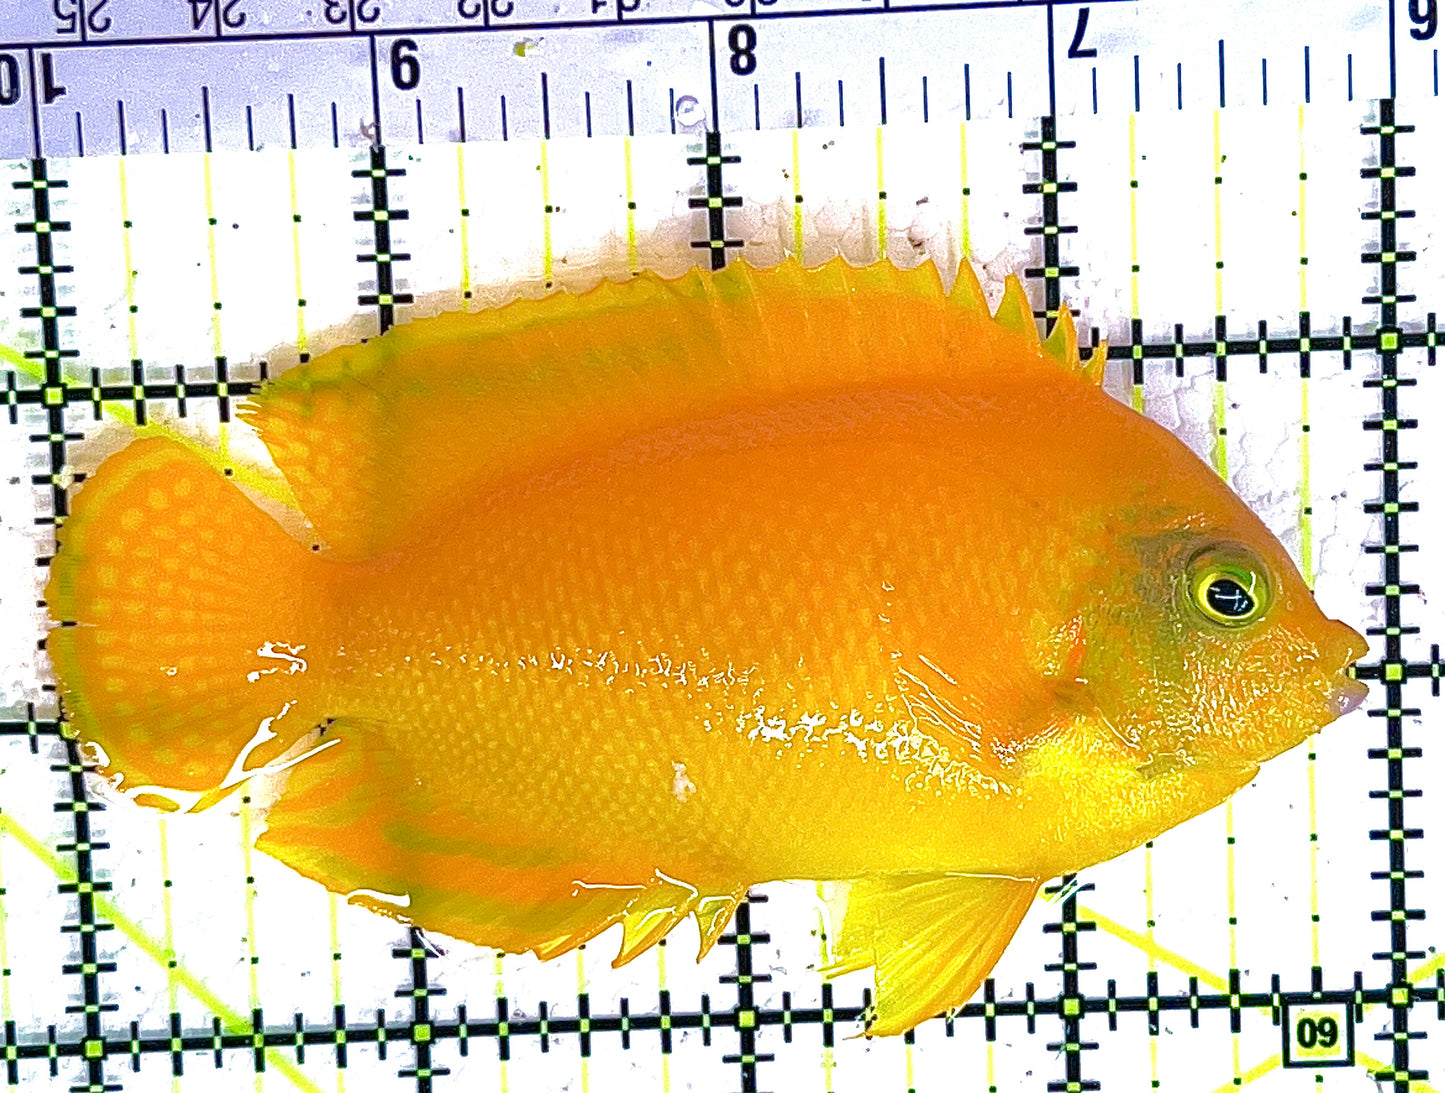 Herald's Angelfish HA042801 WYSIWYG Size: XL 4" approx